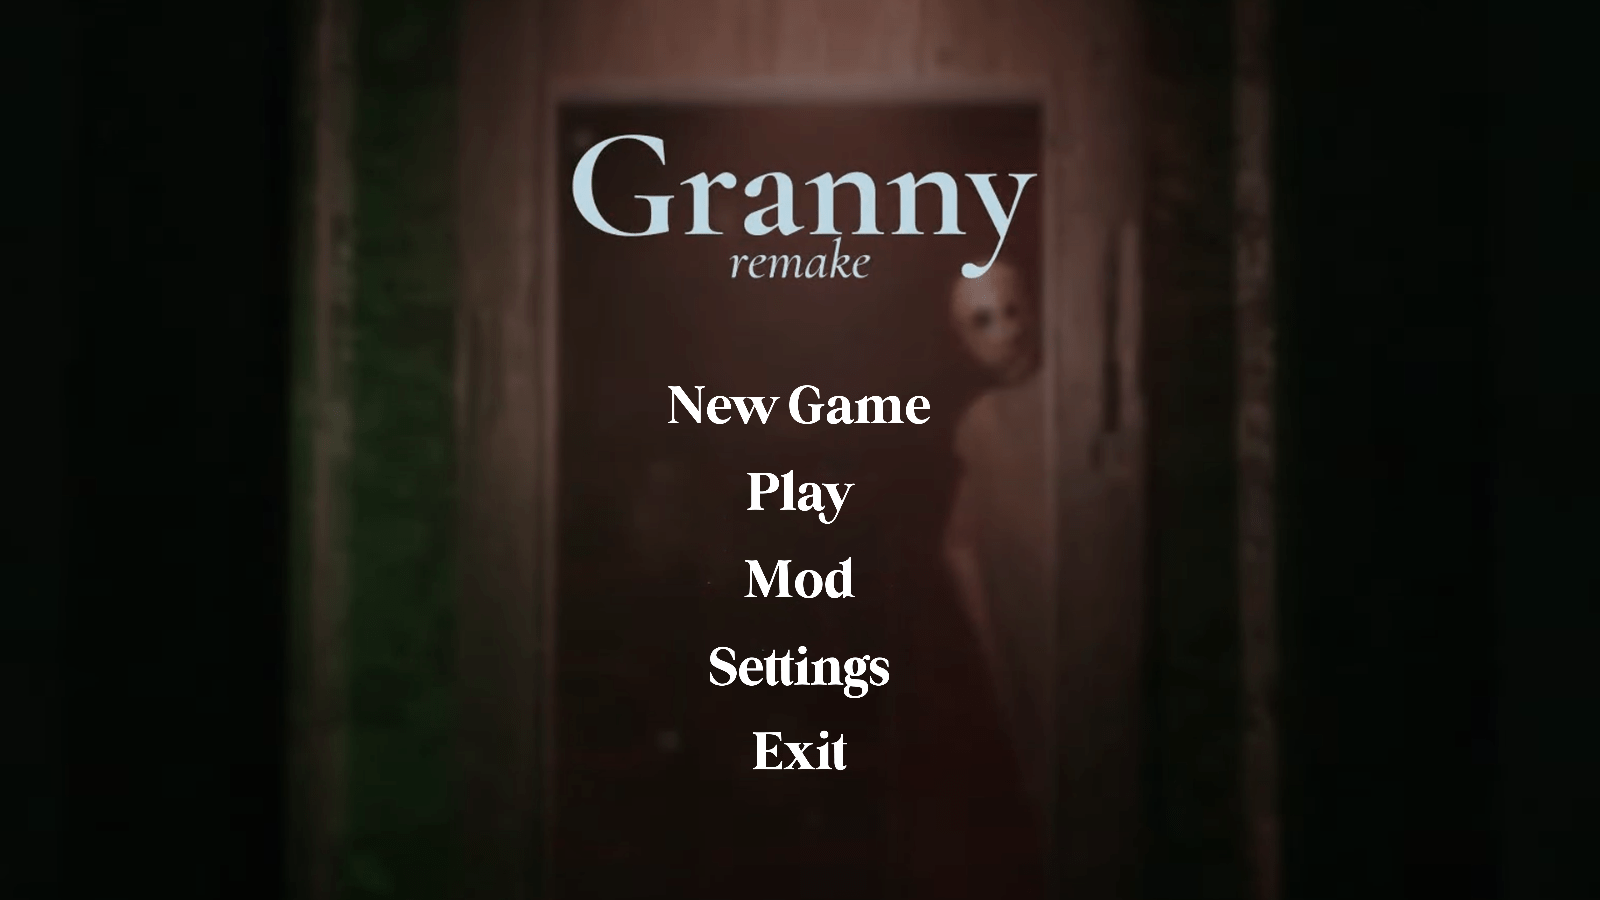 Granny remake 3.3. Granny Remake игра 0 1. ГРЕННИ ремейк на 32 бит.